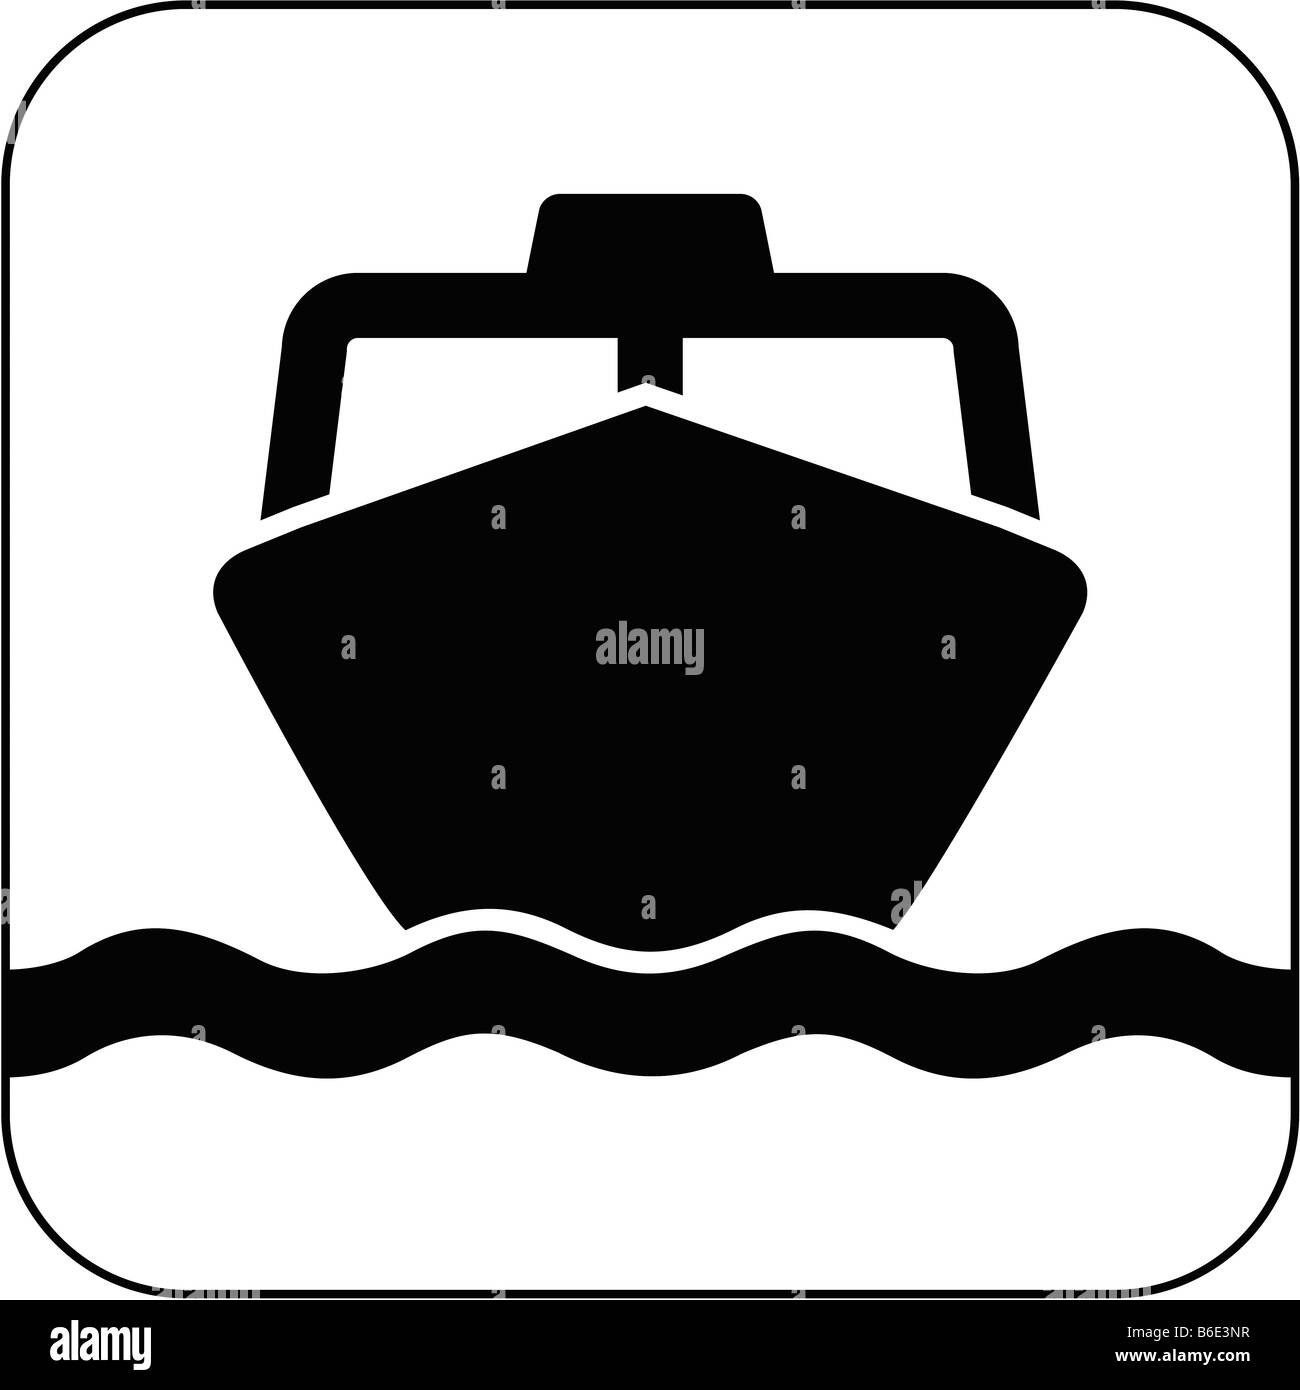 Ship symbol against white background Stock Photo - Alamy